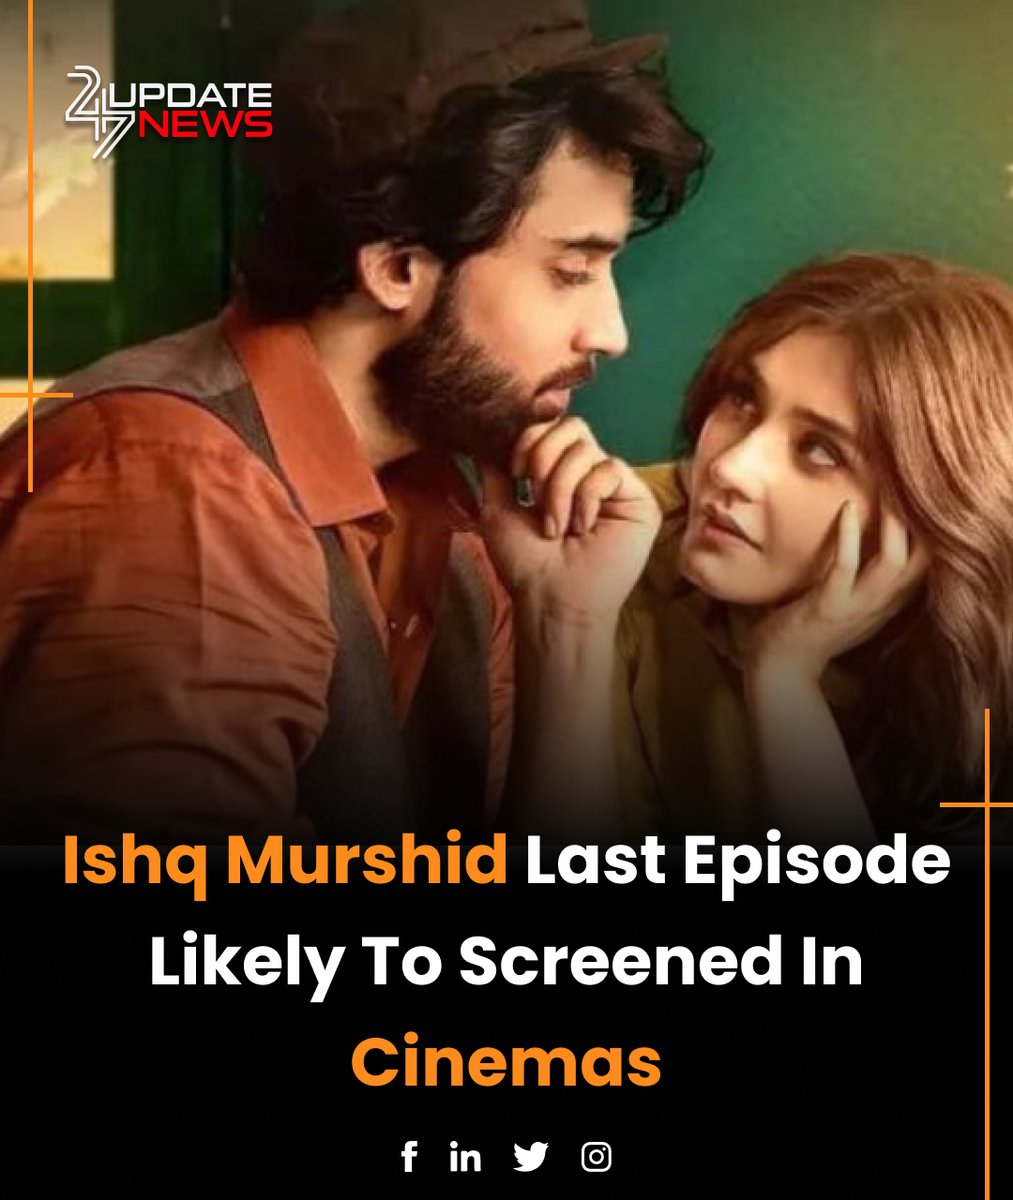 Last episode of Pakistani Drama Ishq Murshid is likely to be screened.
#247updatenews #LatestUpdate #NewsUpdate #pakistanidrama #ishamurshid #bilalabbas #DureFishan #lastepisode #merepasstumho #humtvdramas